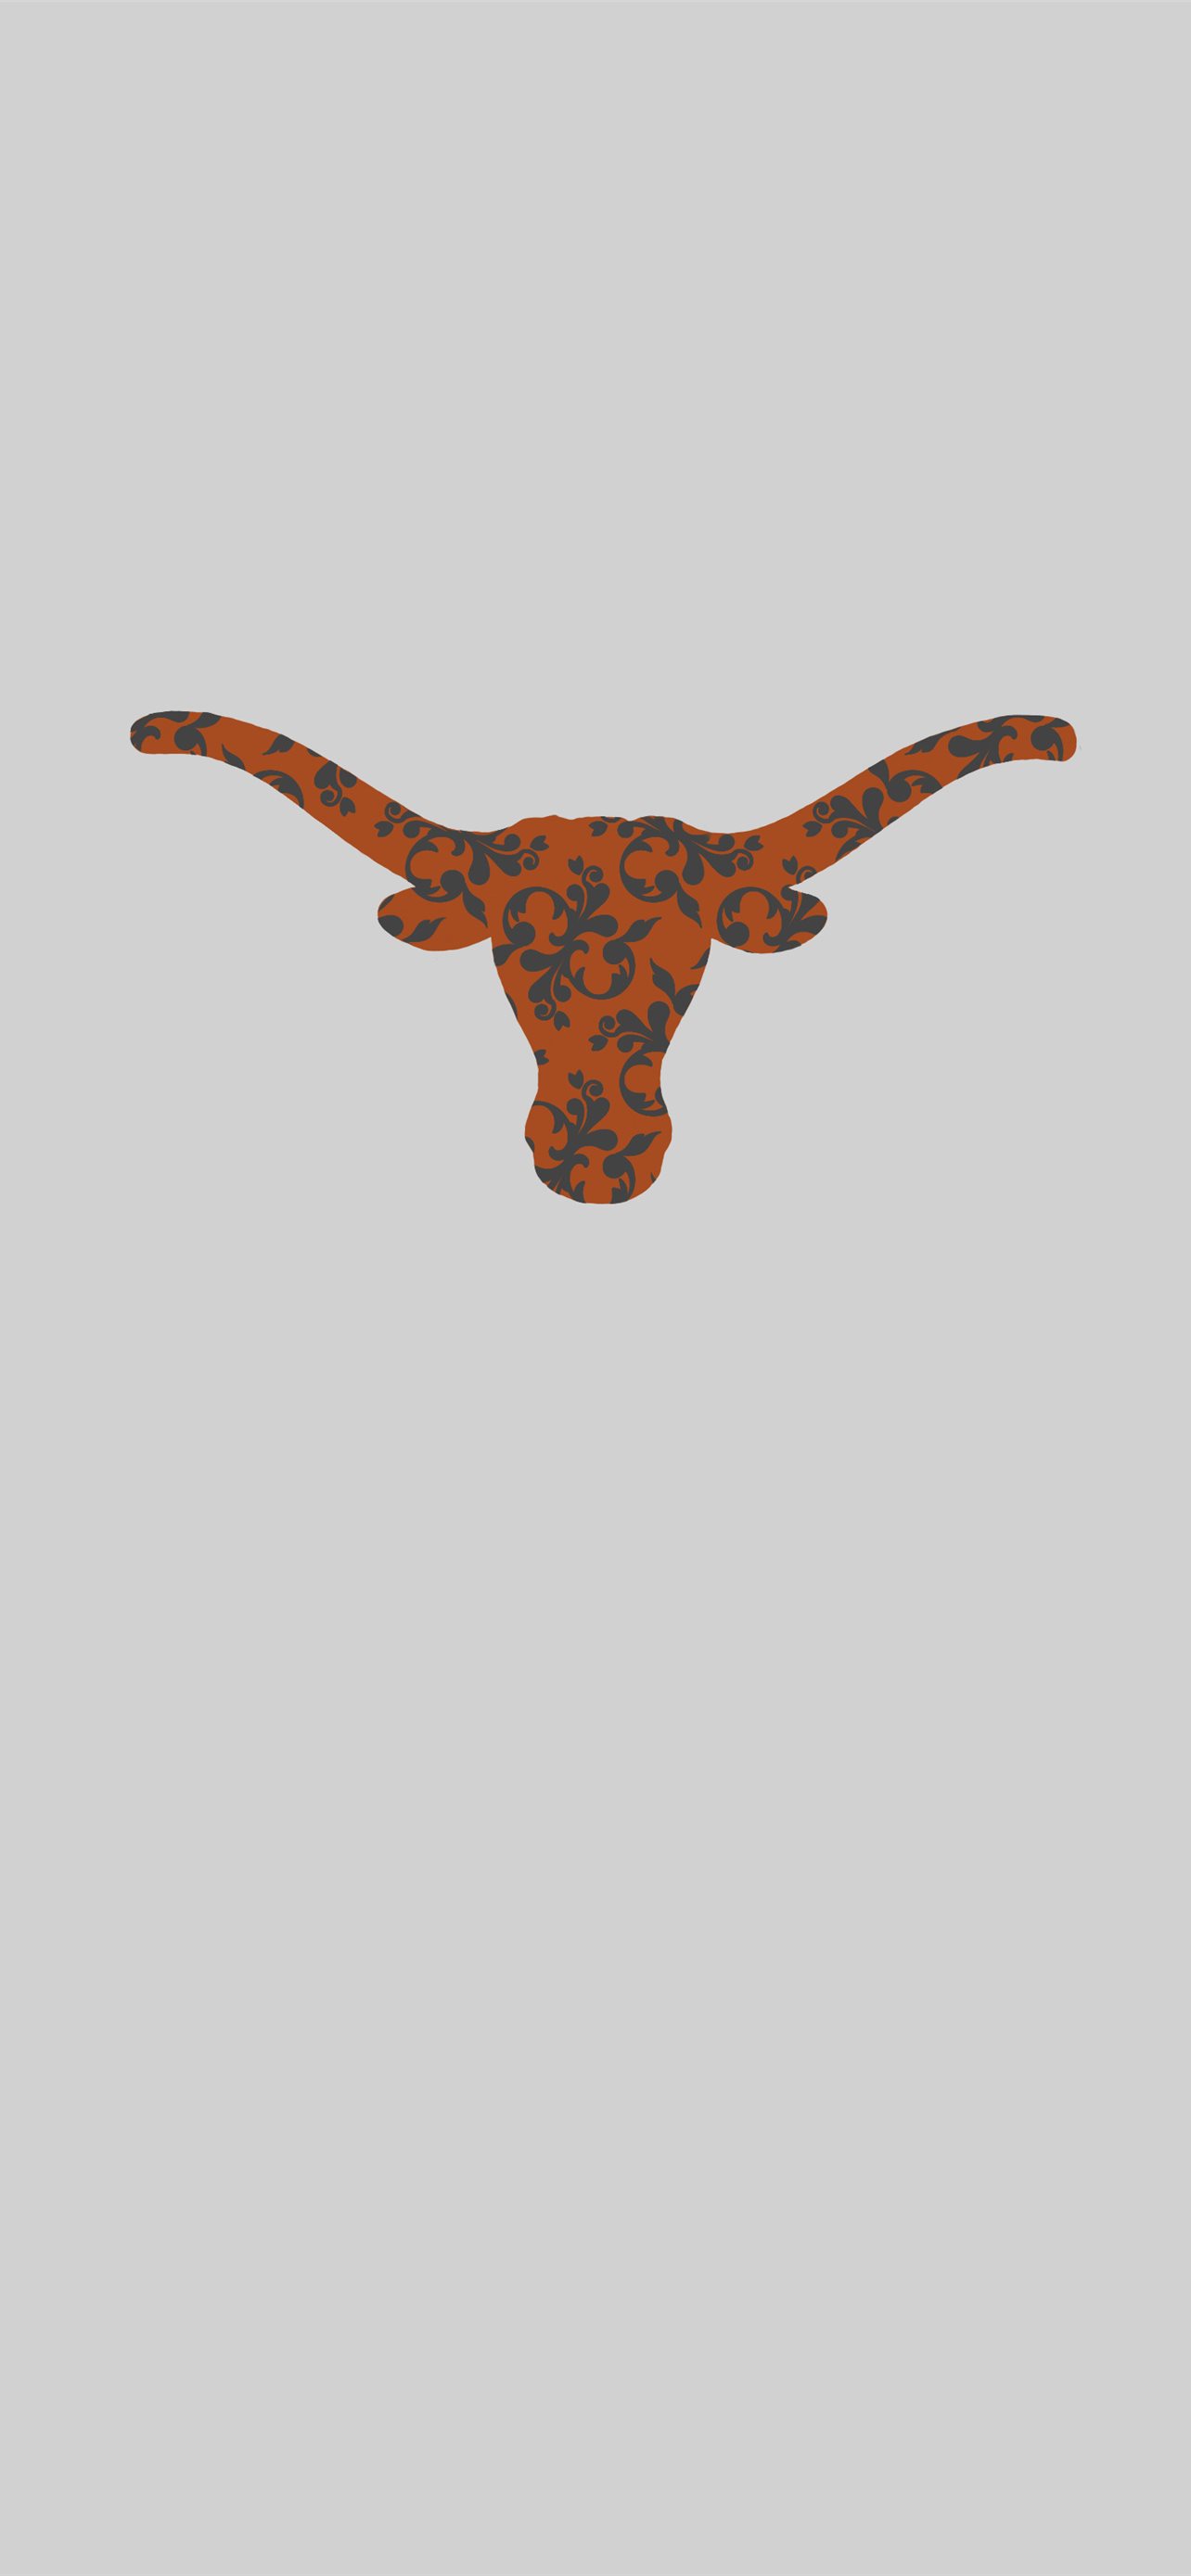 Texas Longhorns Wallpaper for iPhone  Orange texas Texas longhorns  Longhorn